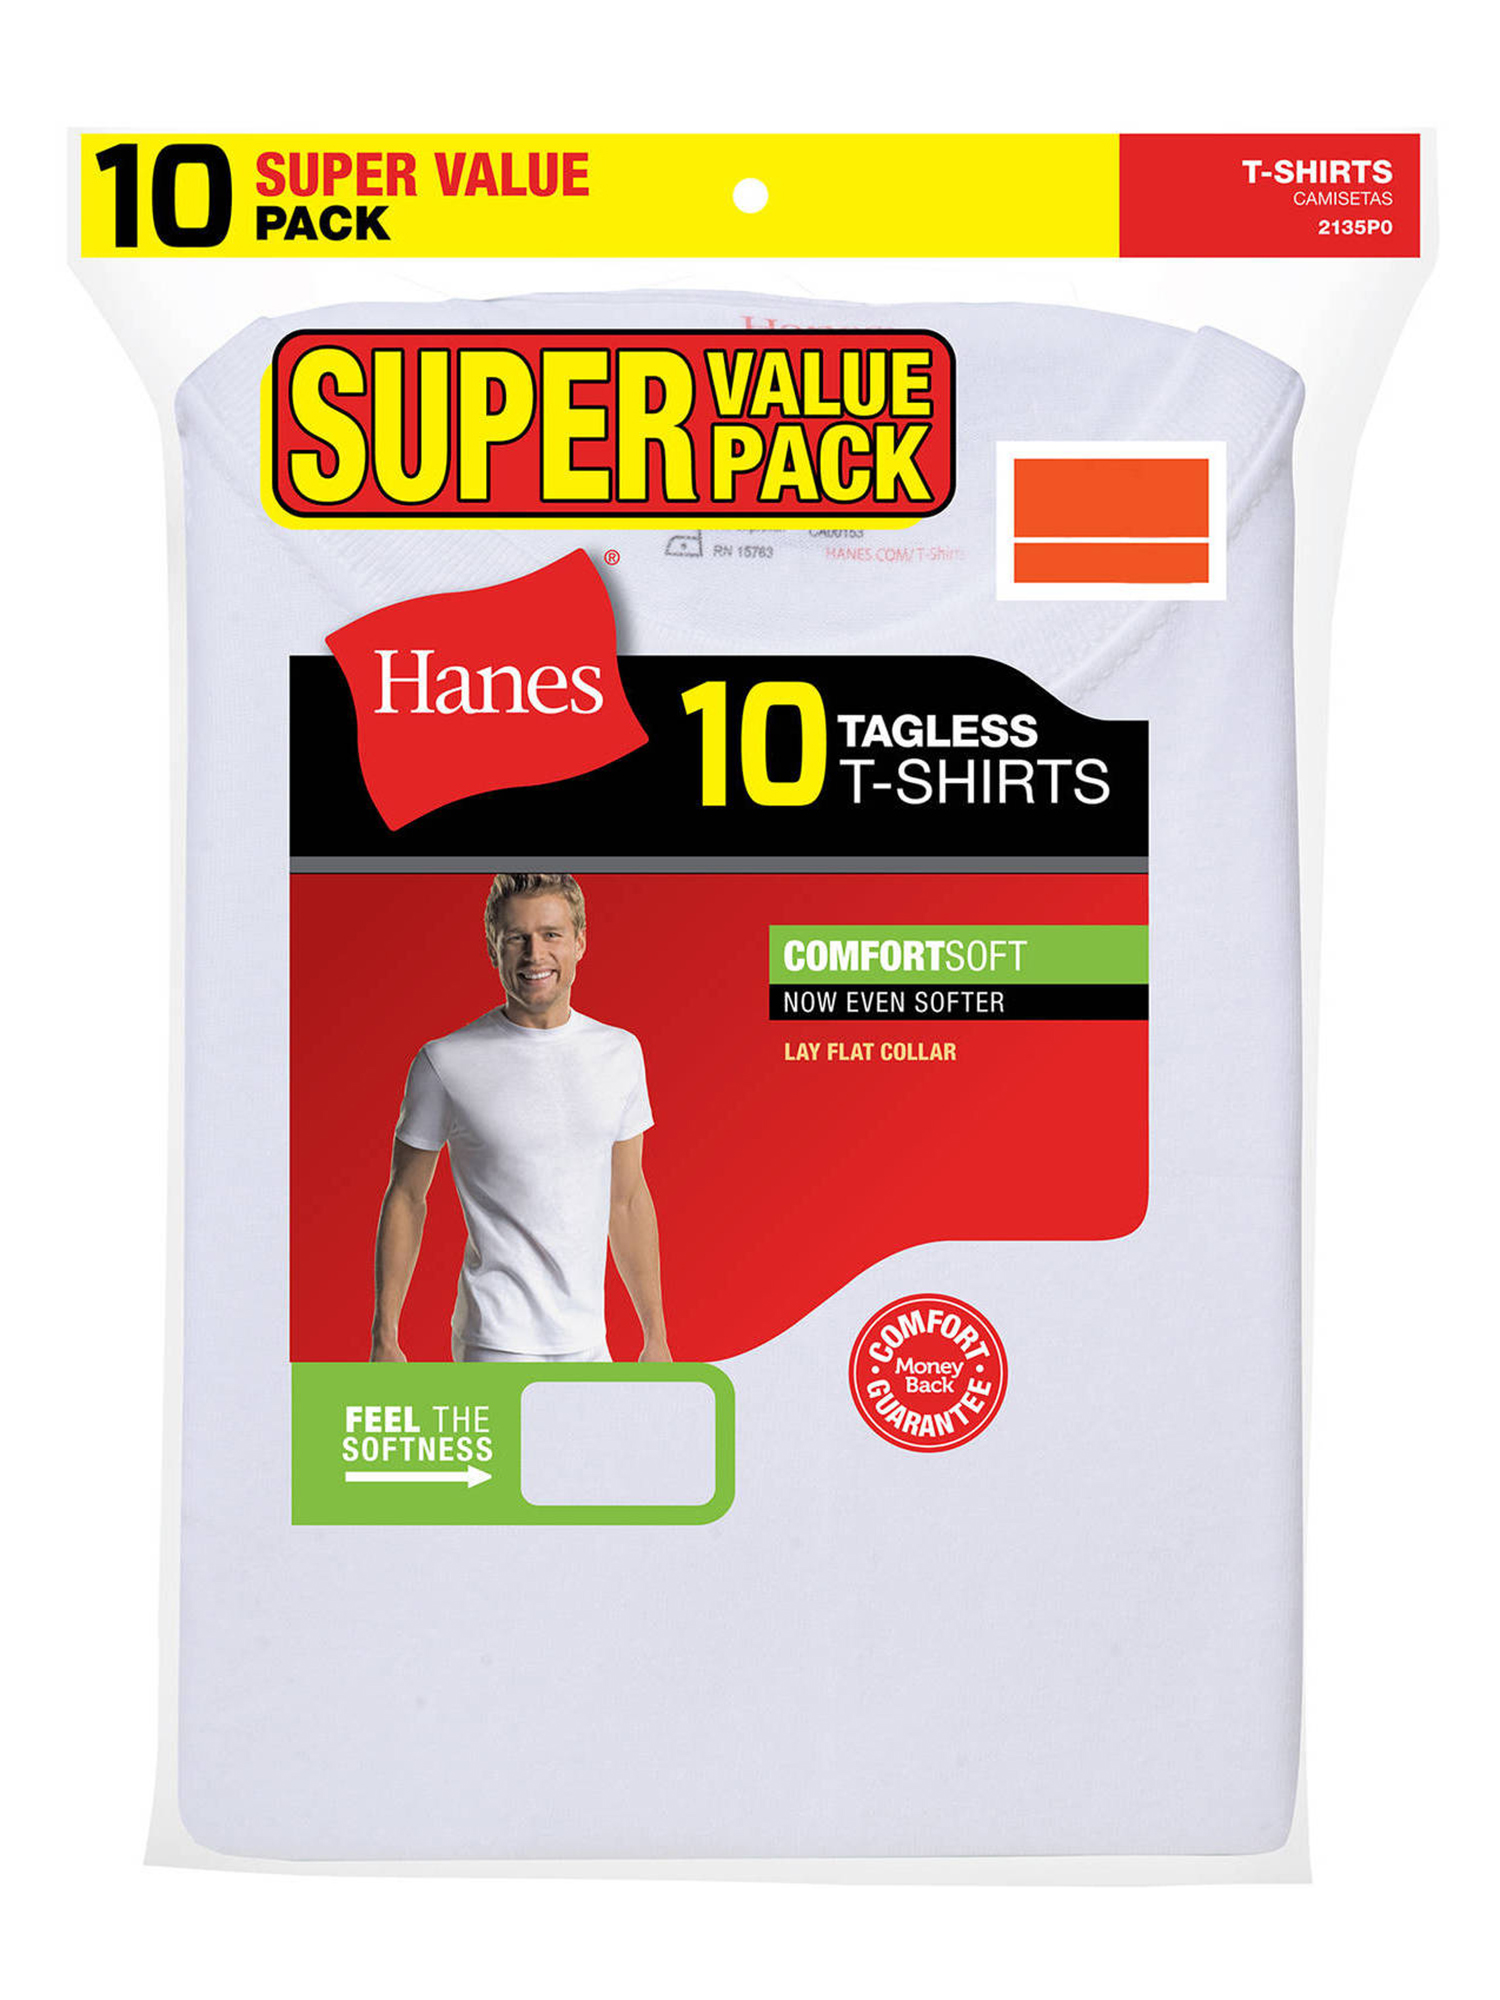 Hanes Men's Super Value Pack White Crew T-Shirt Undershirts, 10 Pack - image 3 of 6